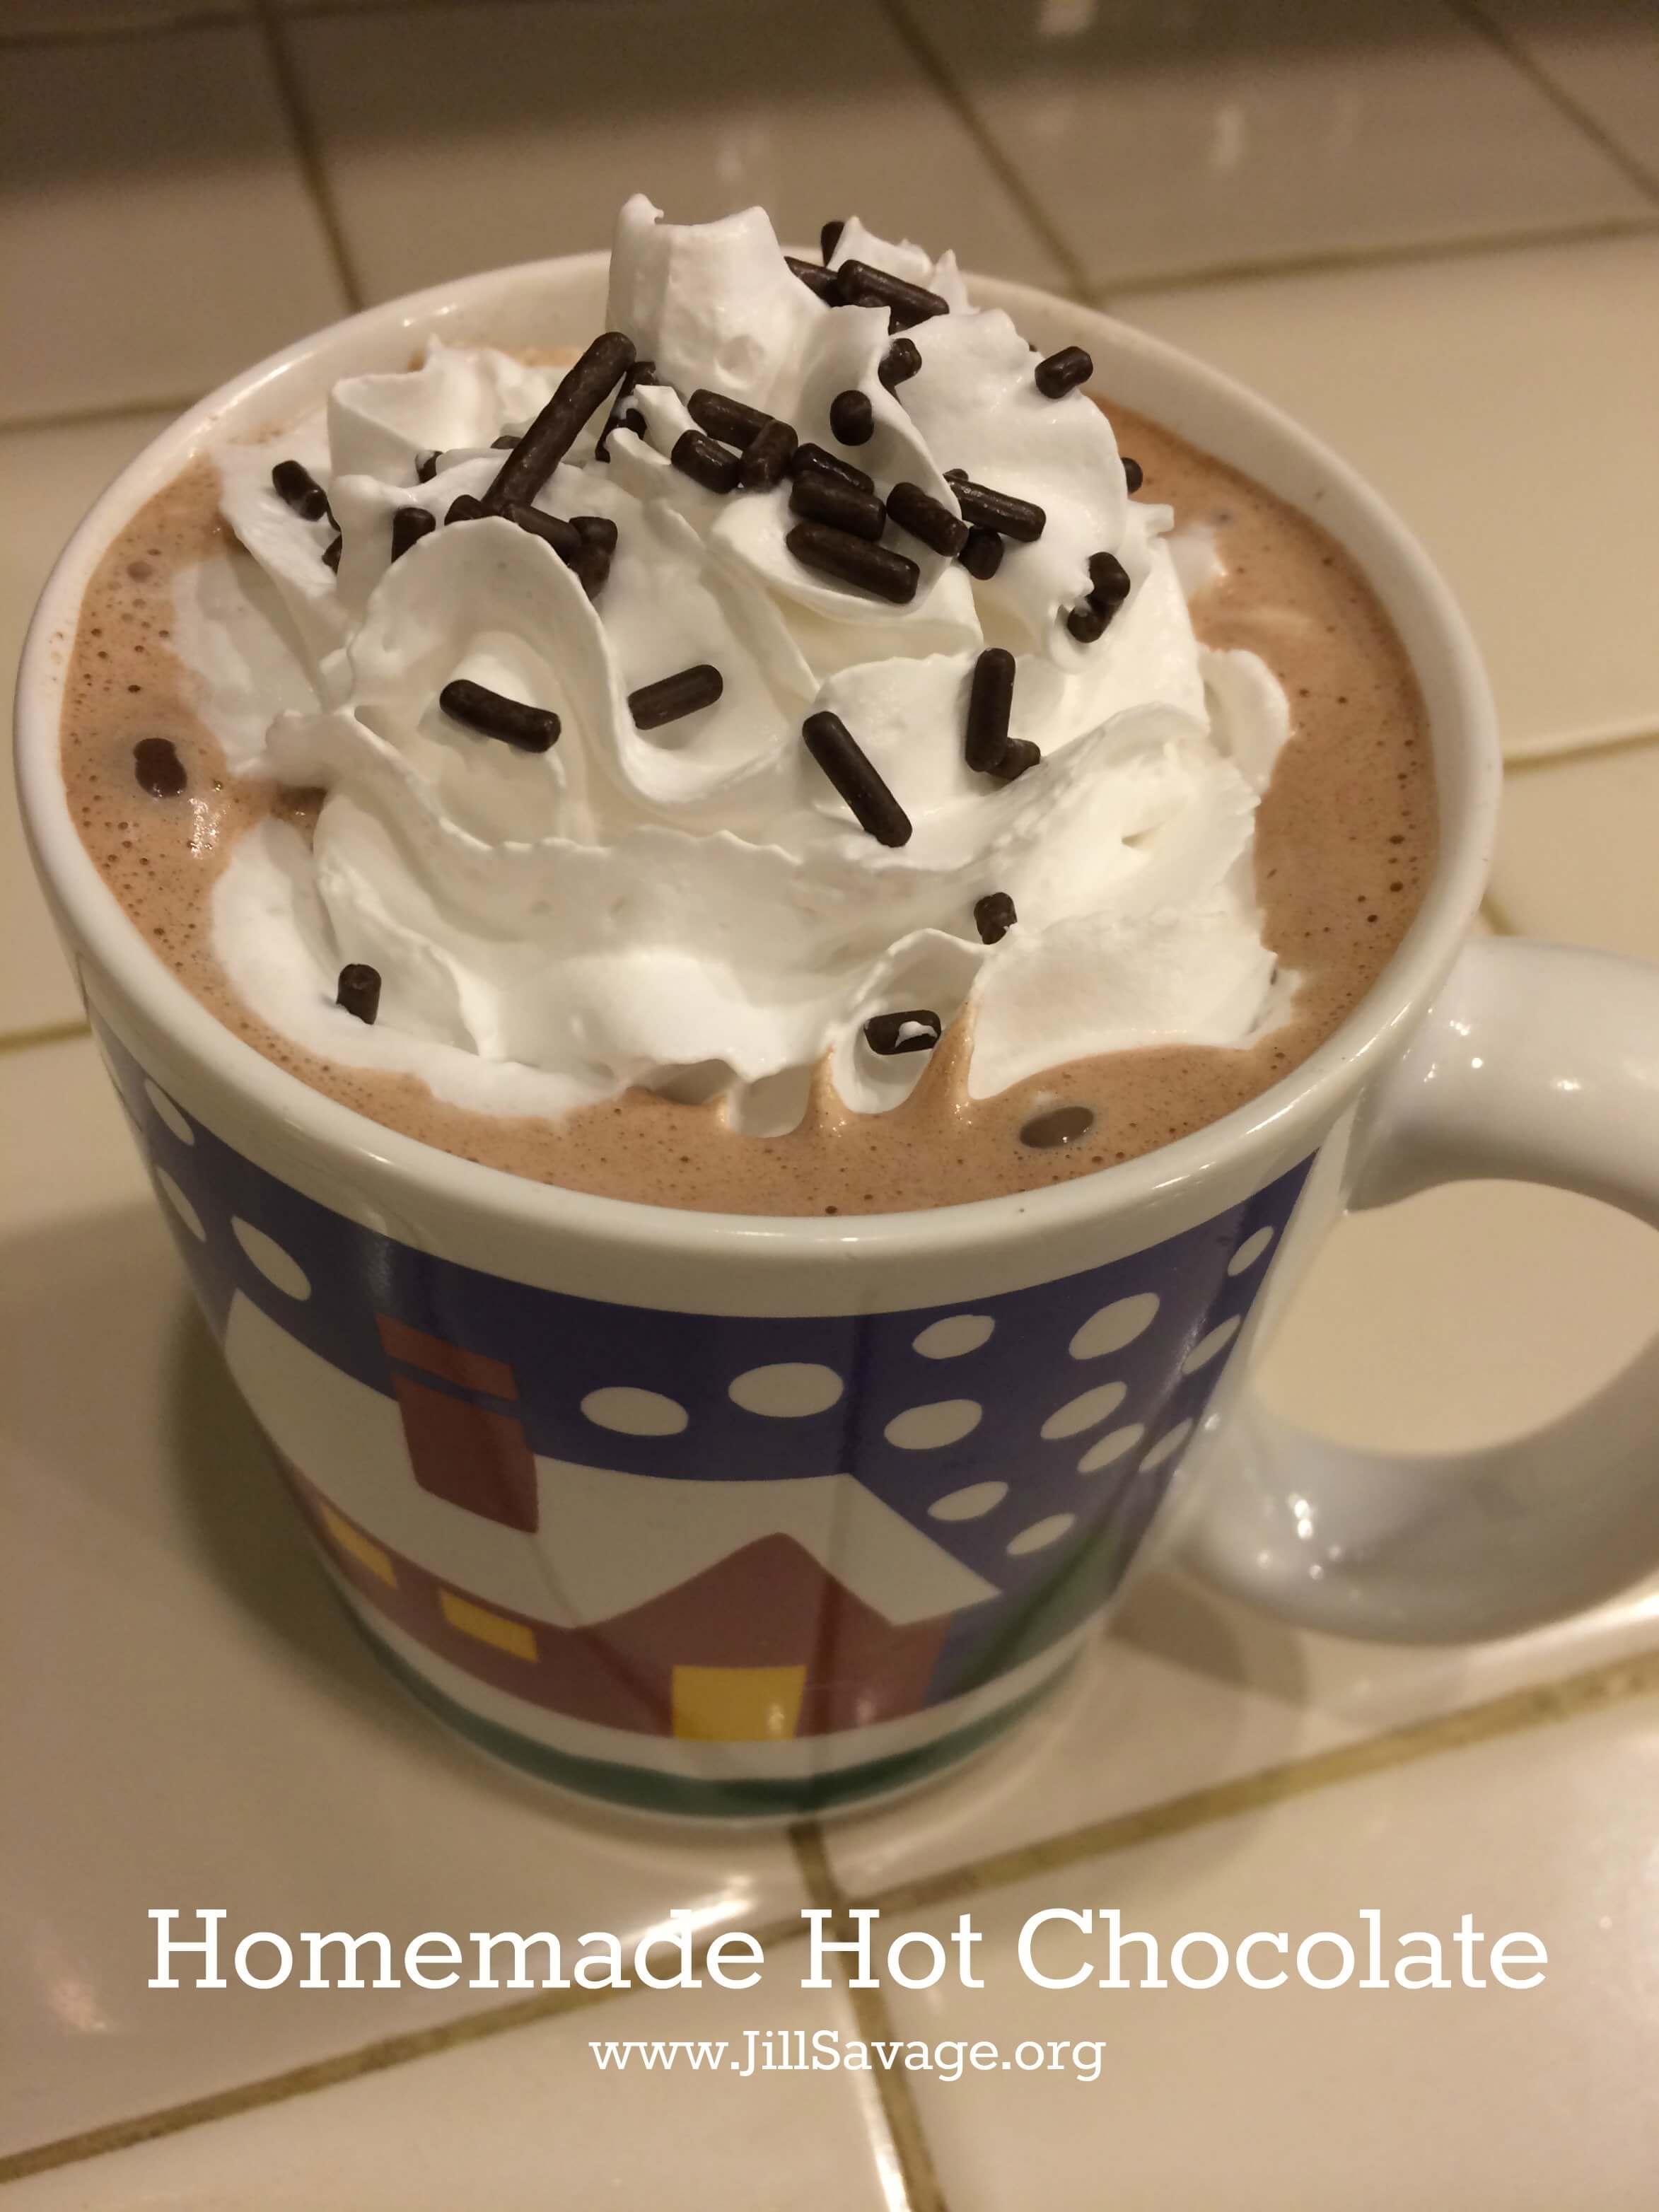 Homemade Hot Chocolate - Mark and Jill Savage